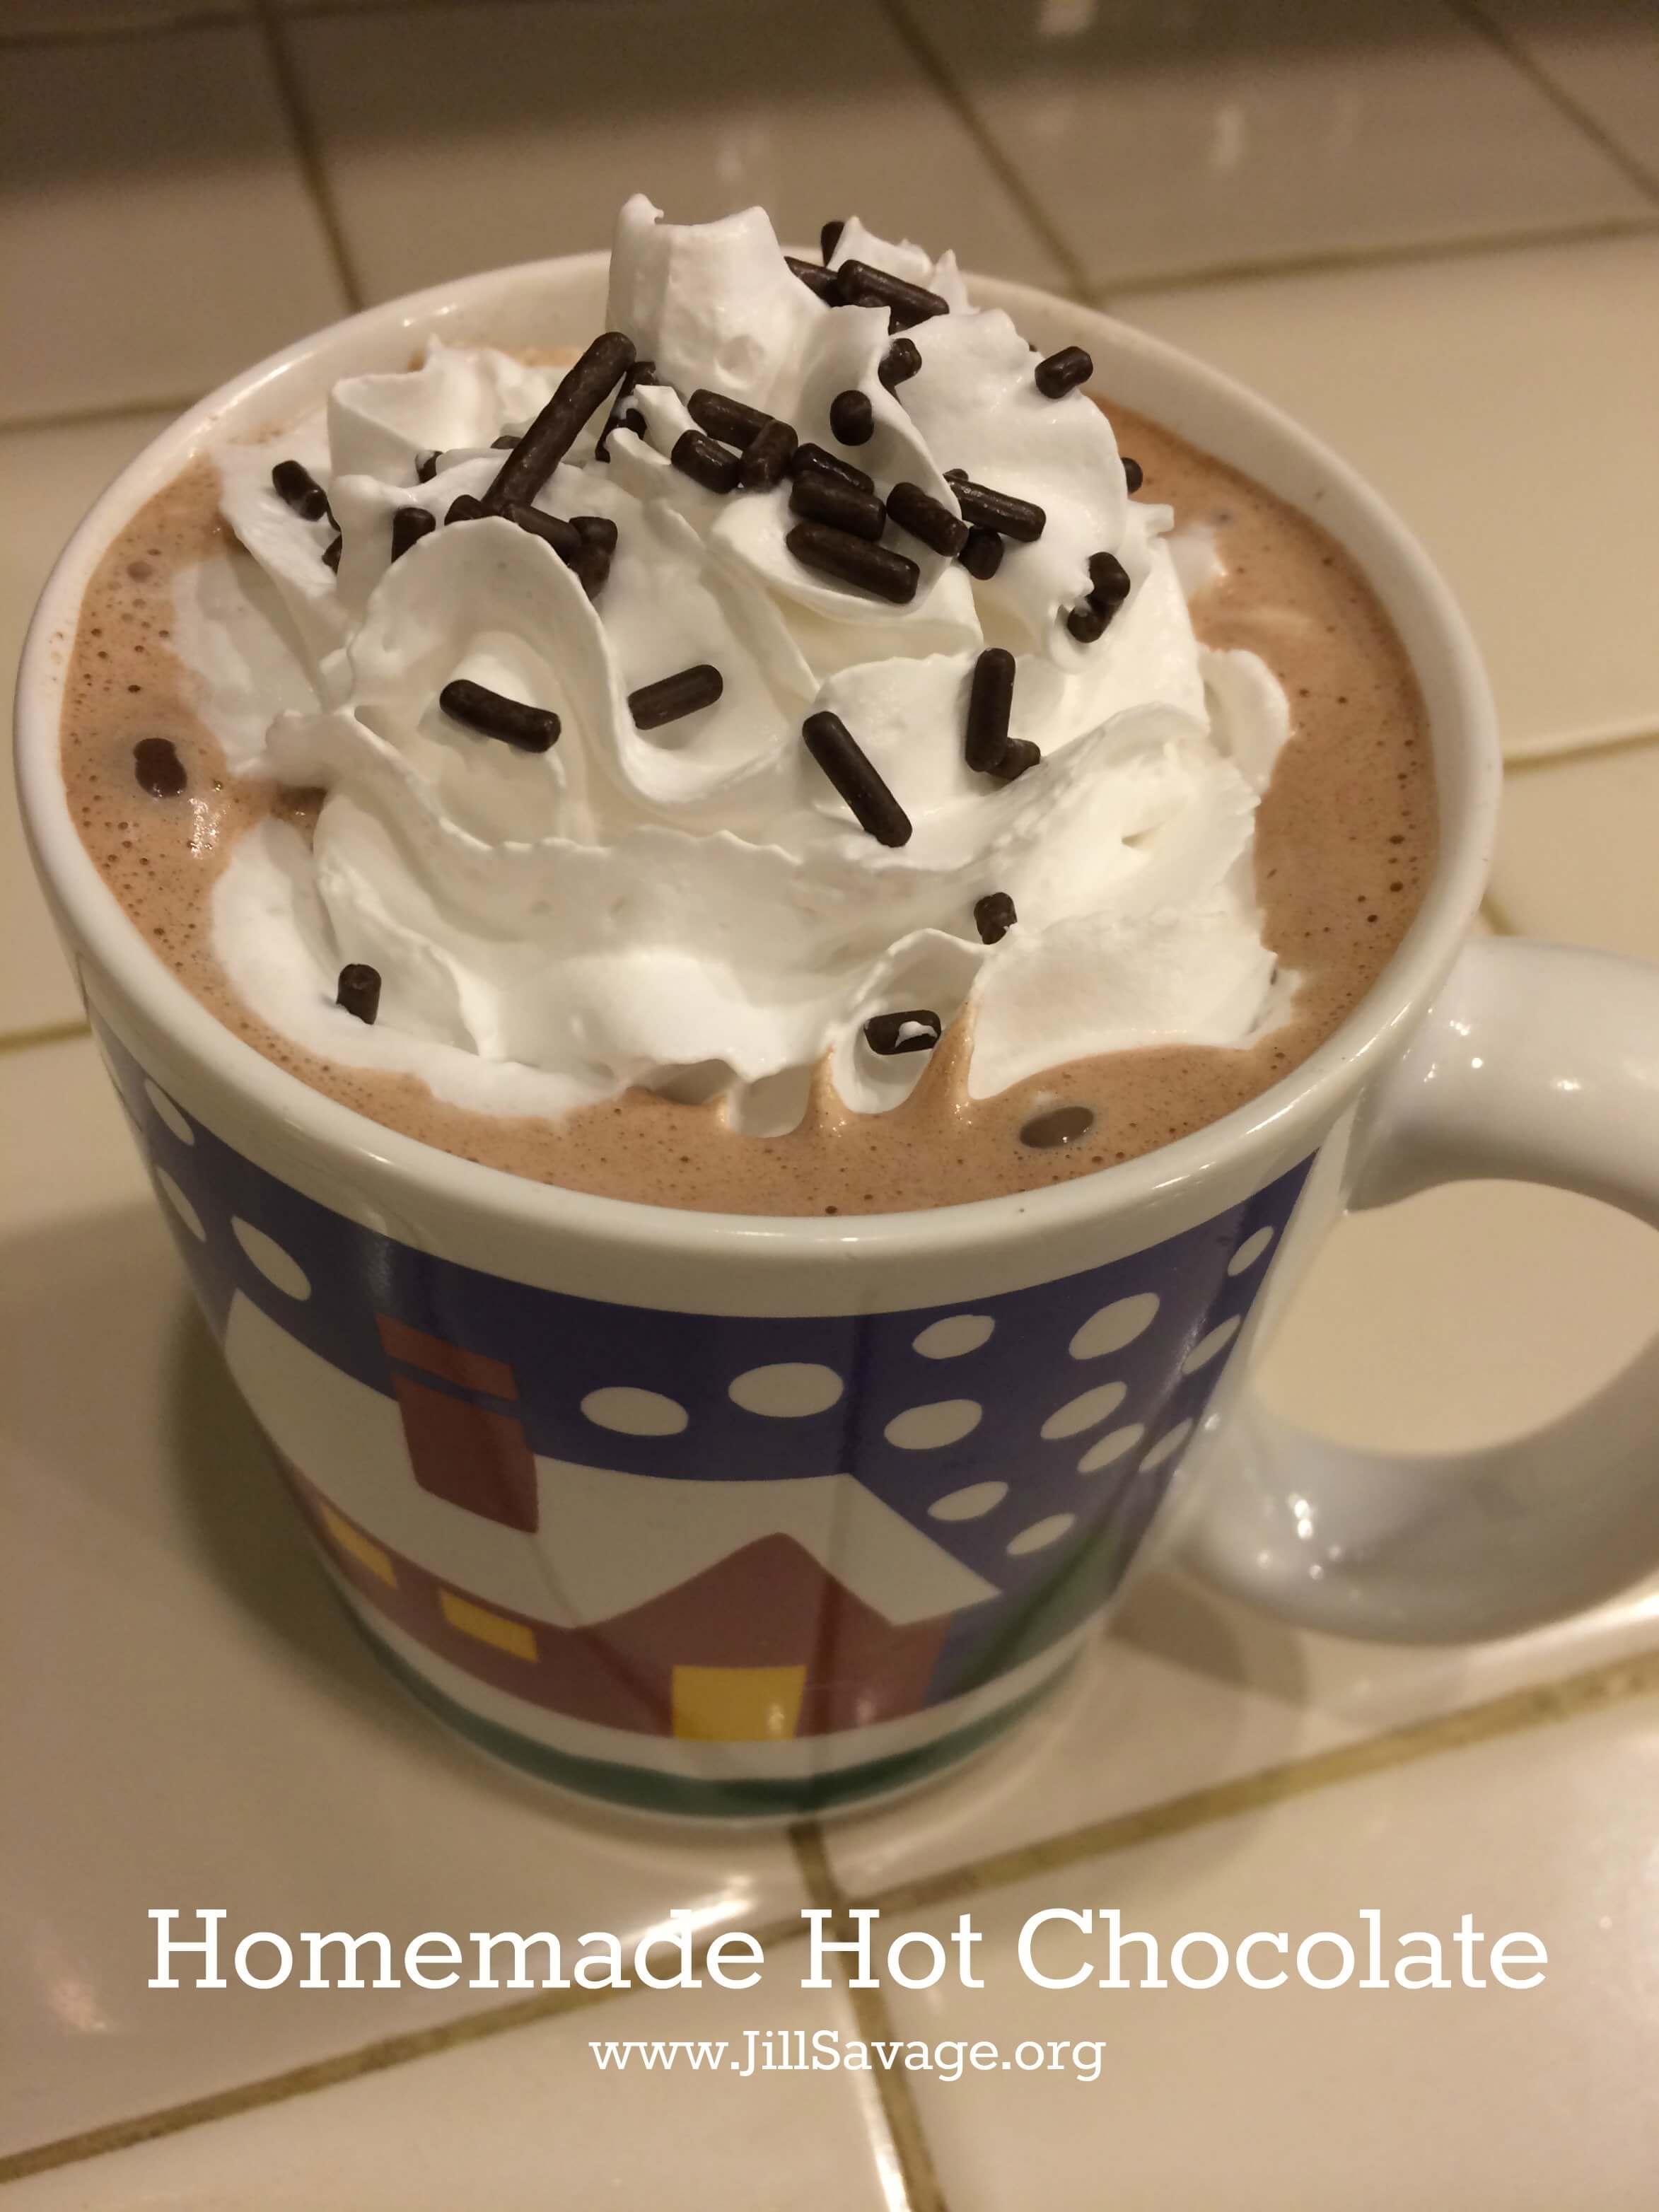 Homemade Hot Chocolate - Mark and Jill Savage